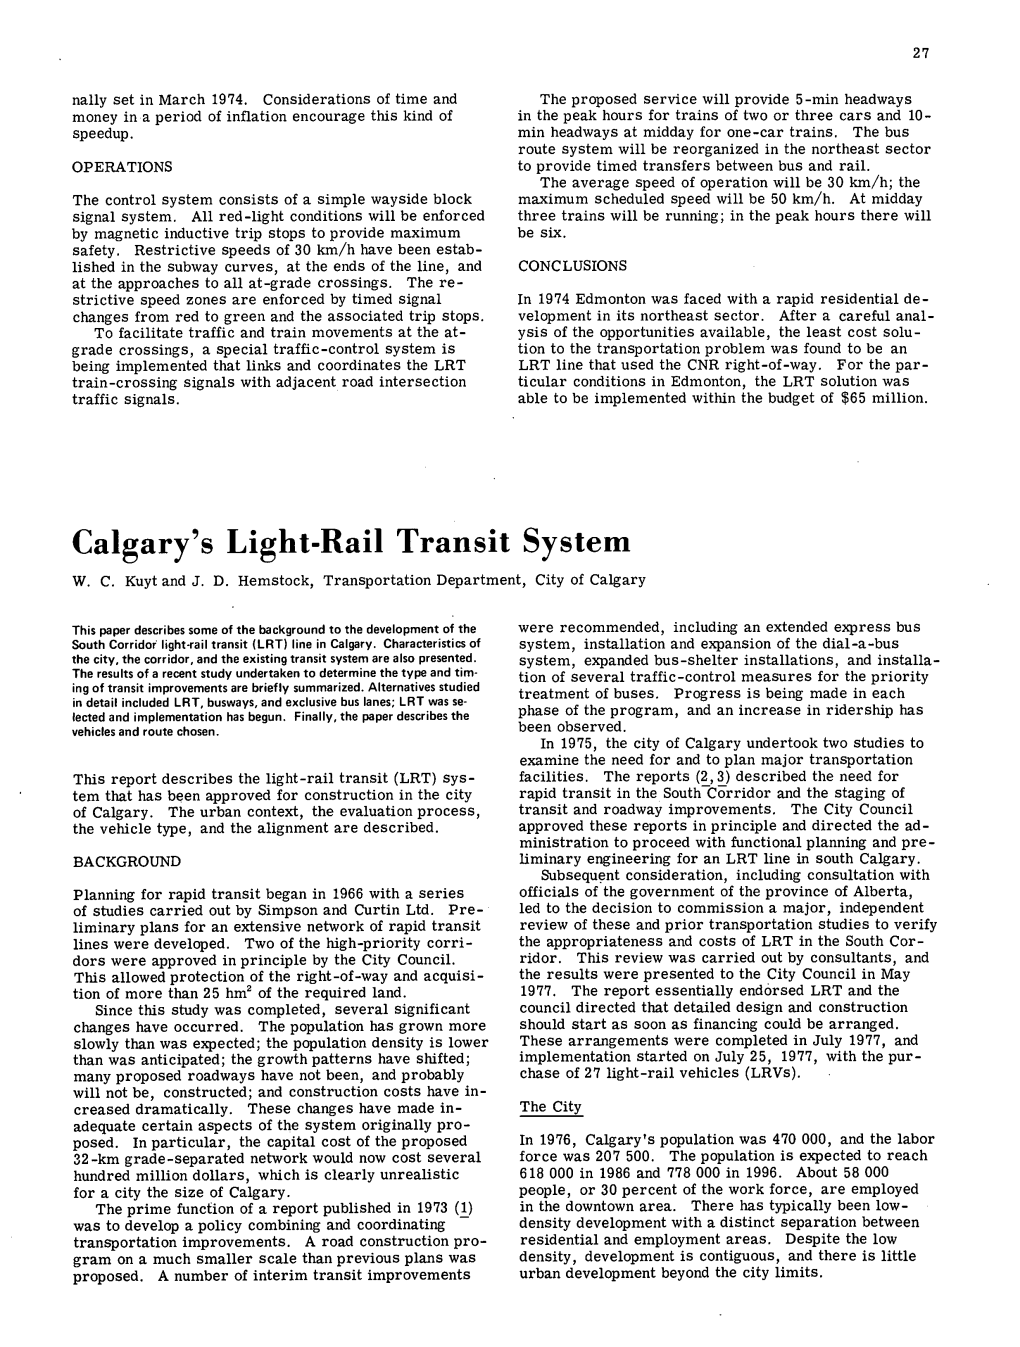 Calgary's Light-Rail Transit System W